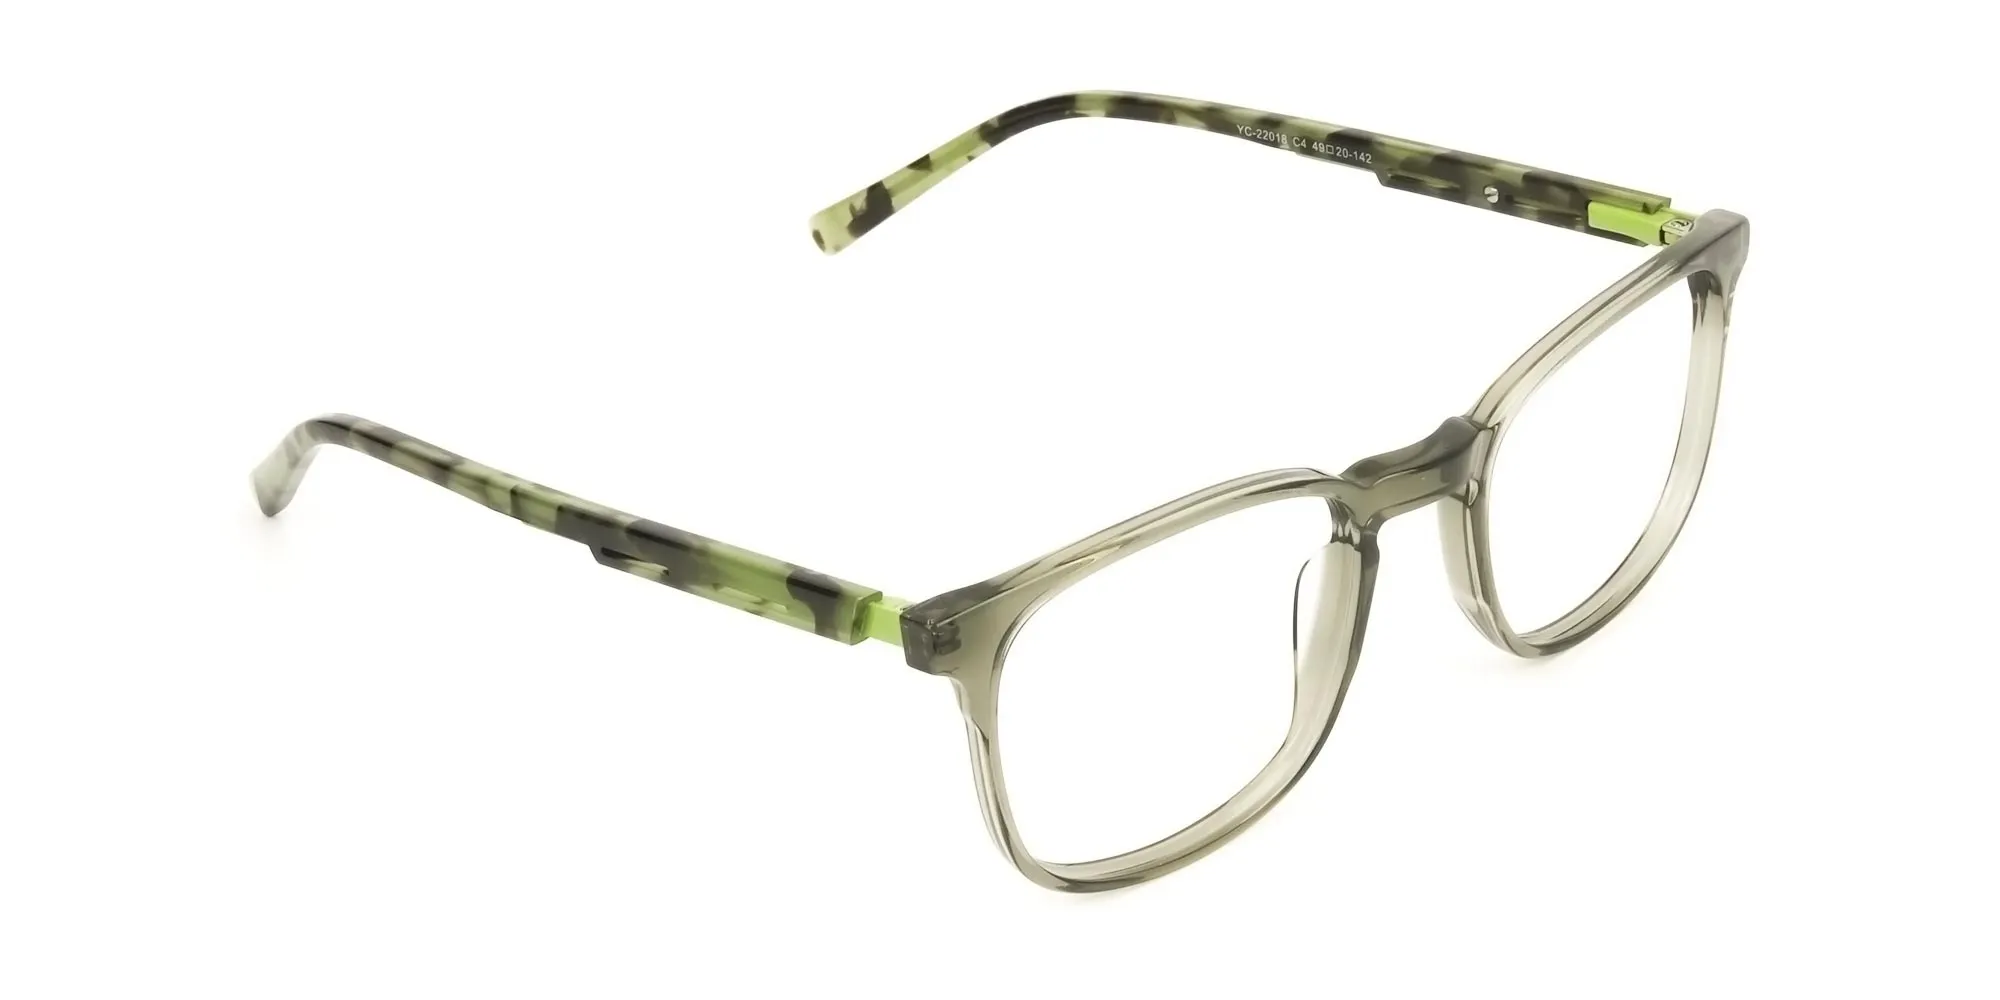 Translucent Camouflage & Olive Green Square Glasses - 2